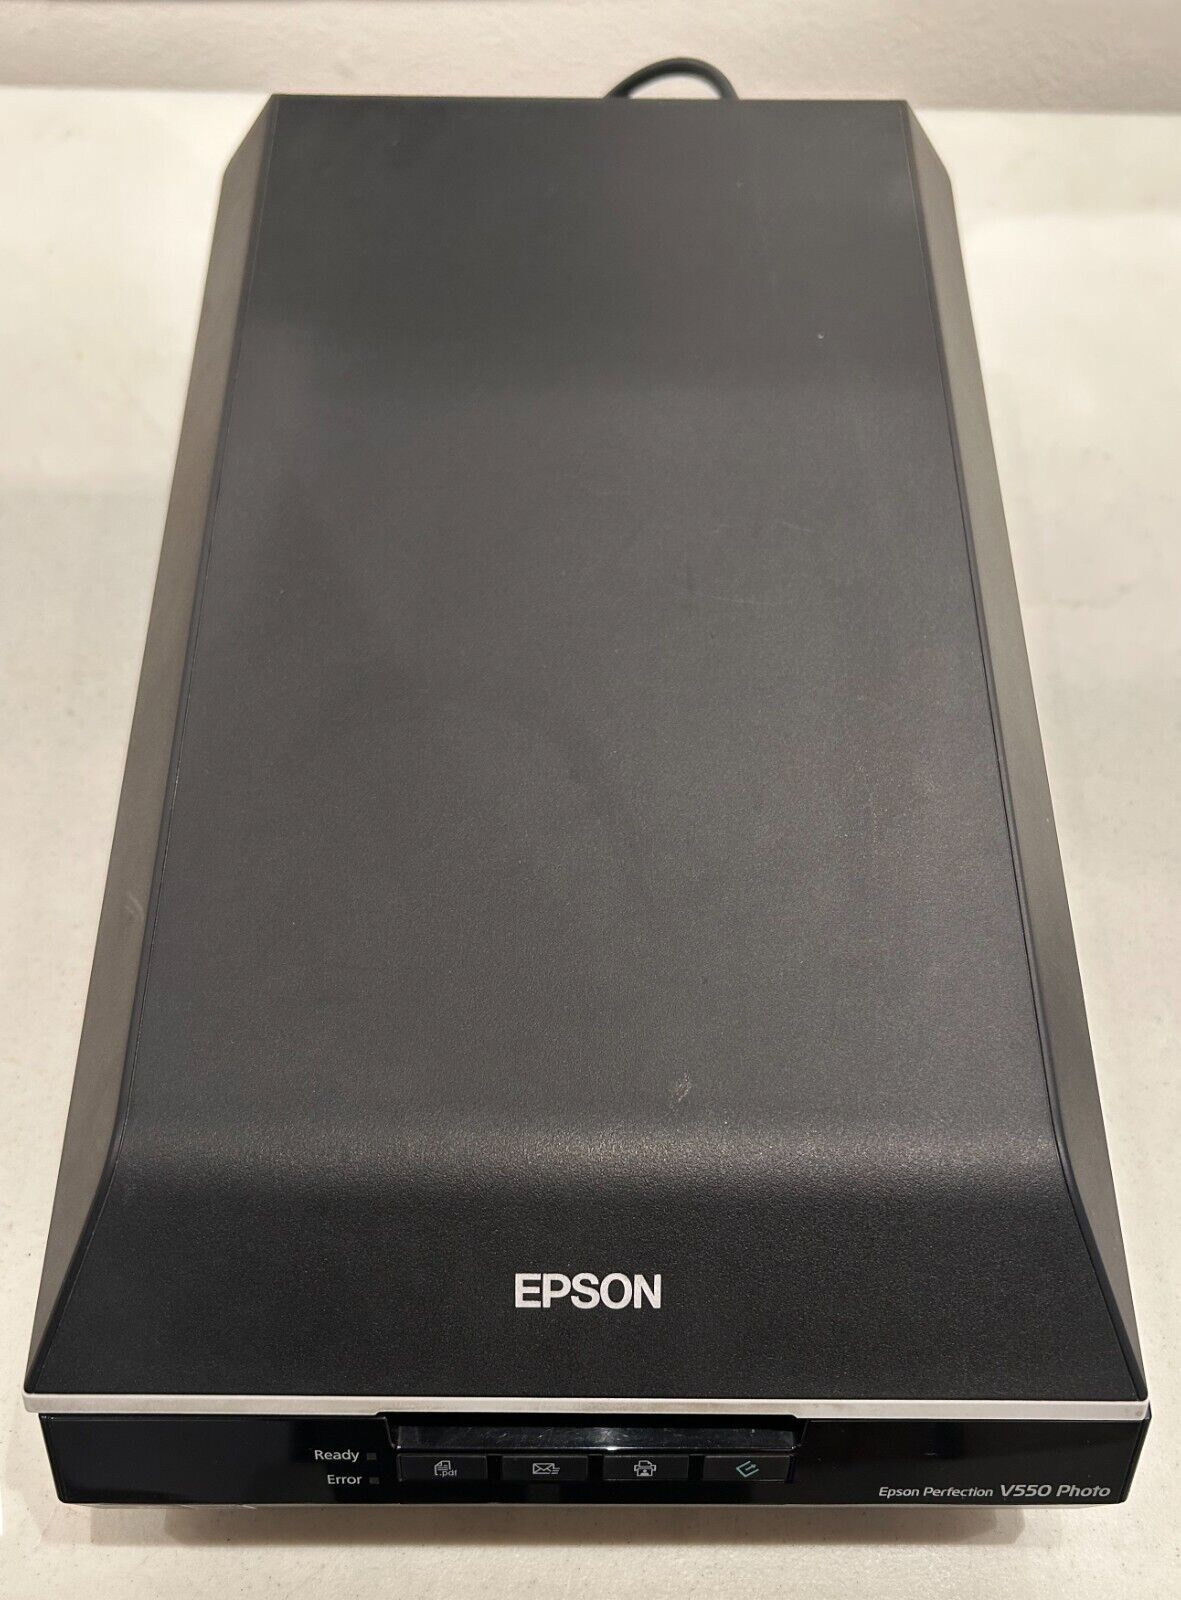 Epson Perfection V550 Photo Color Scanner 6400 dpi - Black